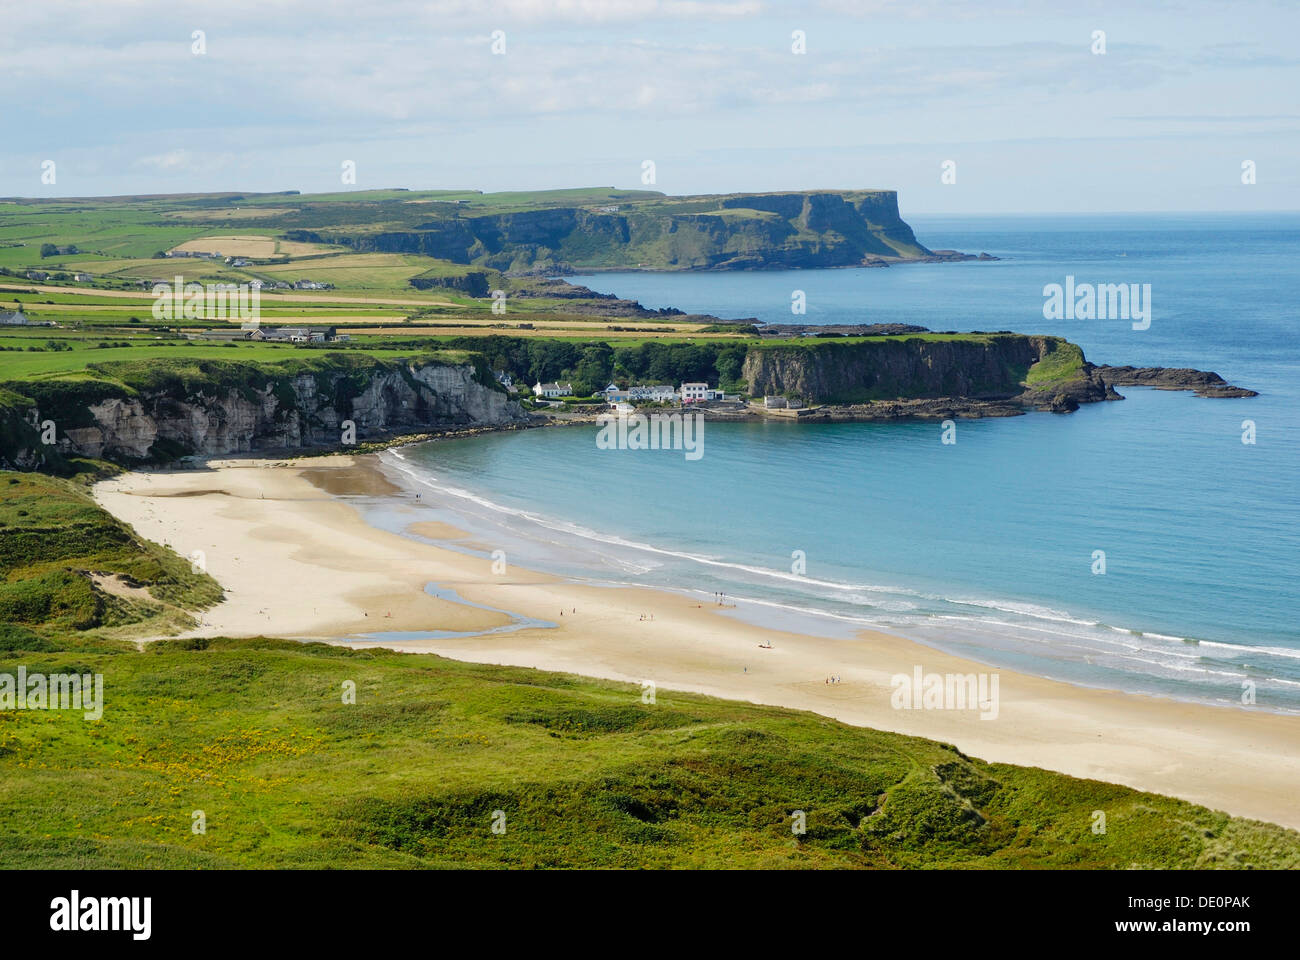 Northern Irish coastline with wide sandy beaches in Ballycastle, County Antrim, Northern Ireland, United Kingdom, Europe Stock Photo